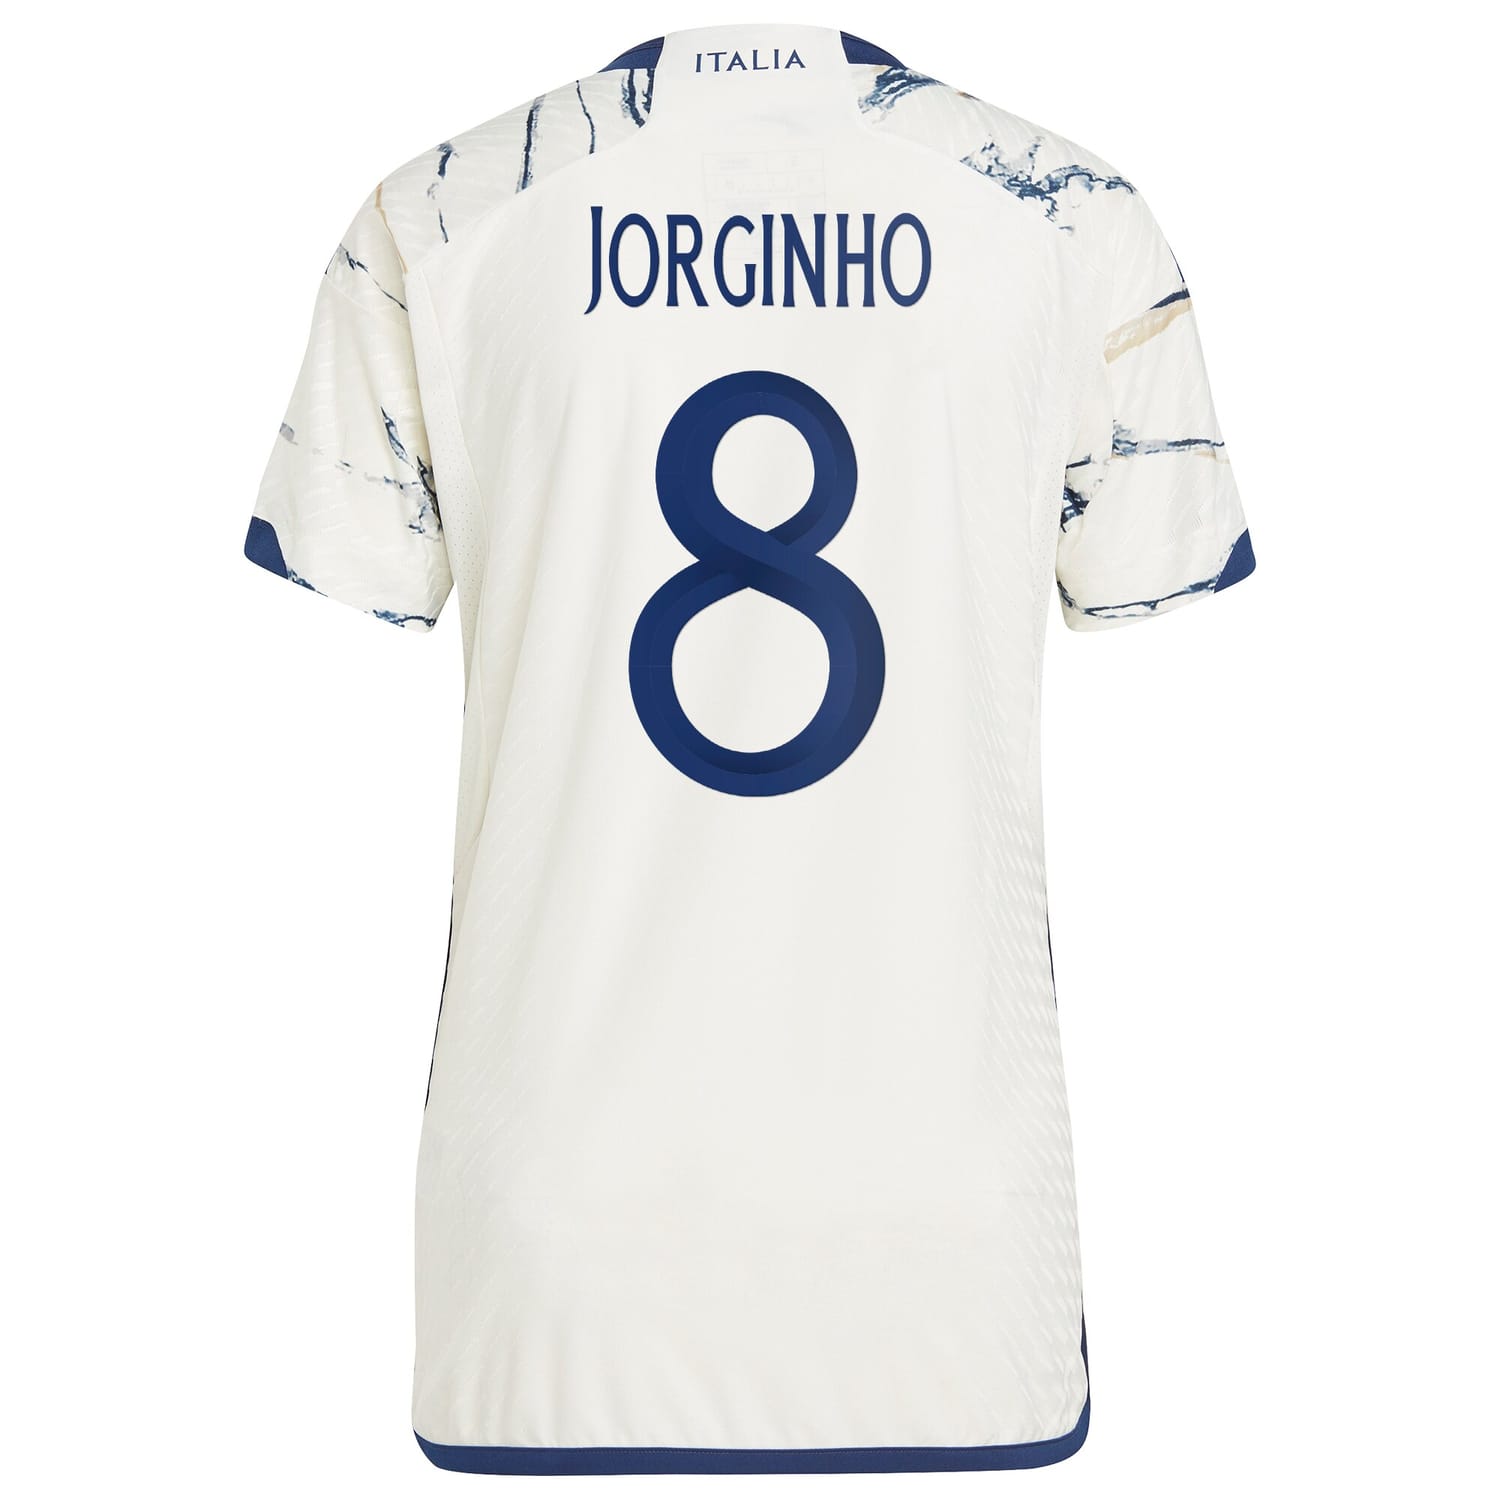 Italy National Team Away Authentic Jersey Shirt White 2023 player Jorginho printing for Men